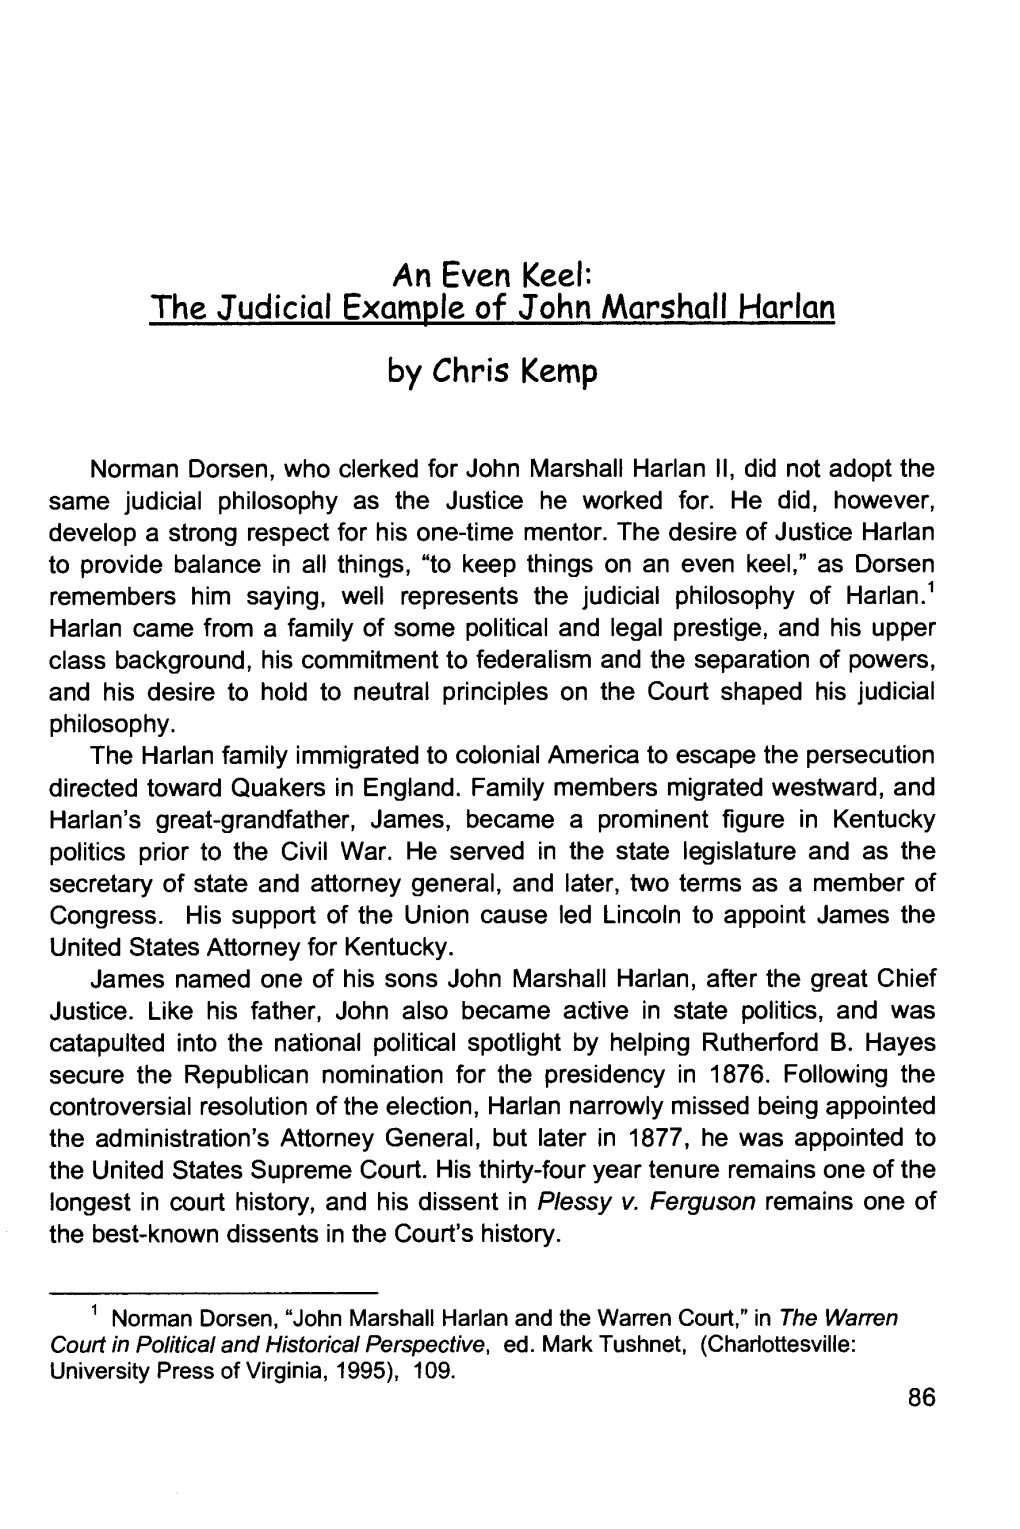 The Judicial Example of John Marshall Harlan by Chris Kemp